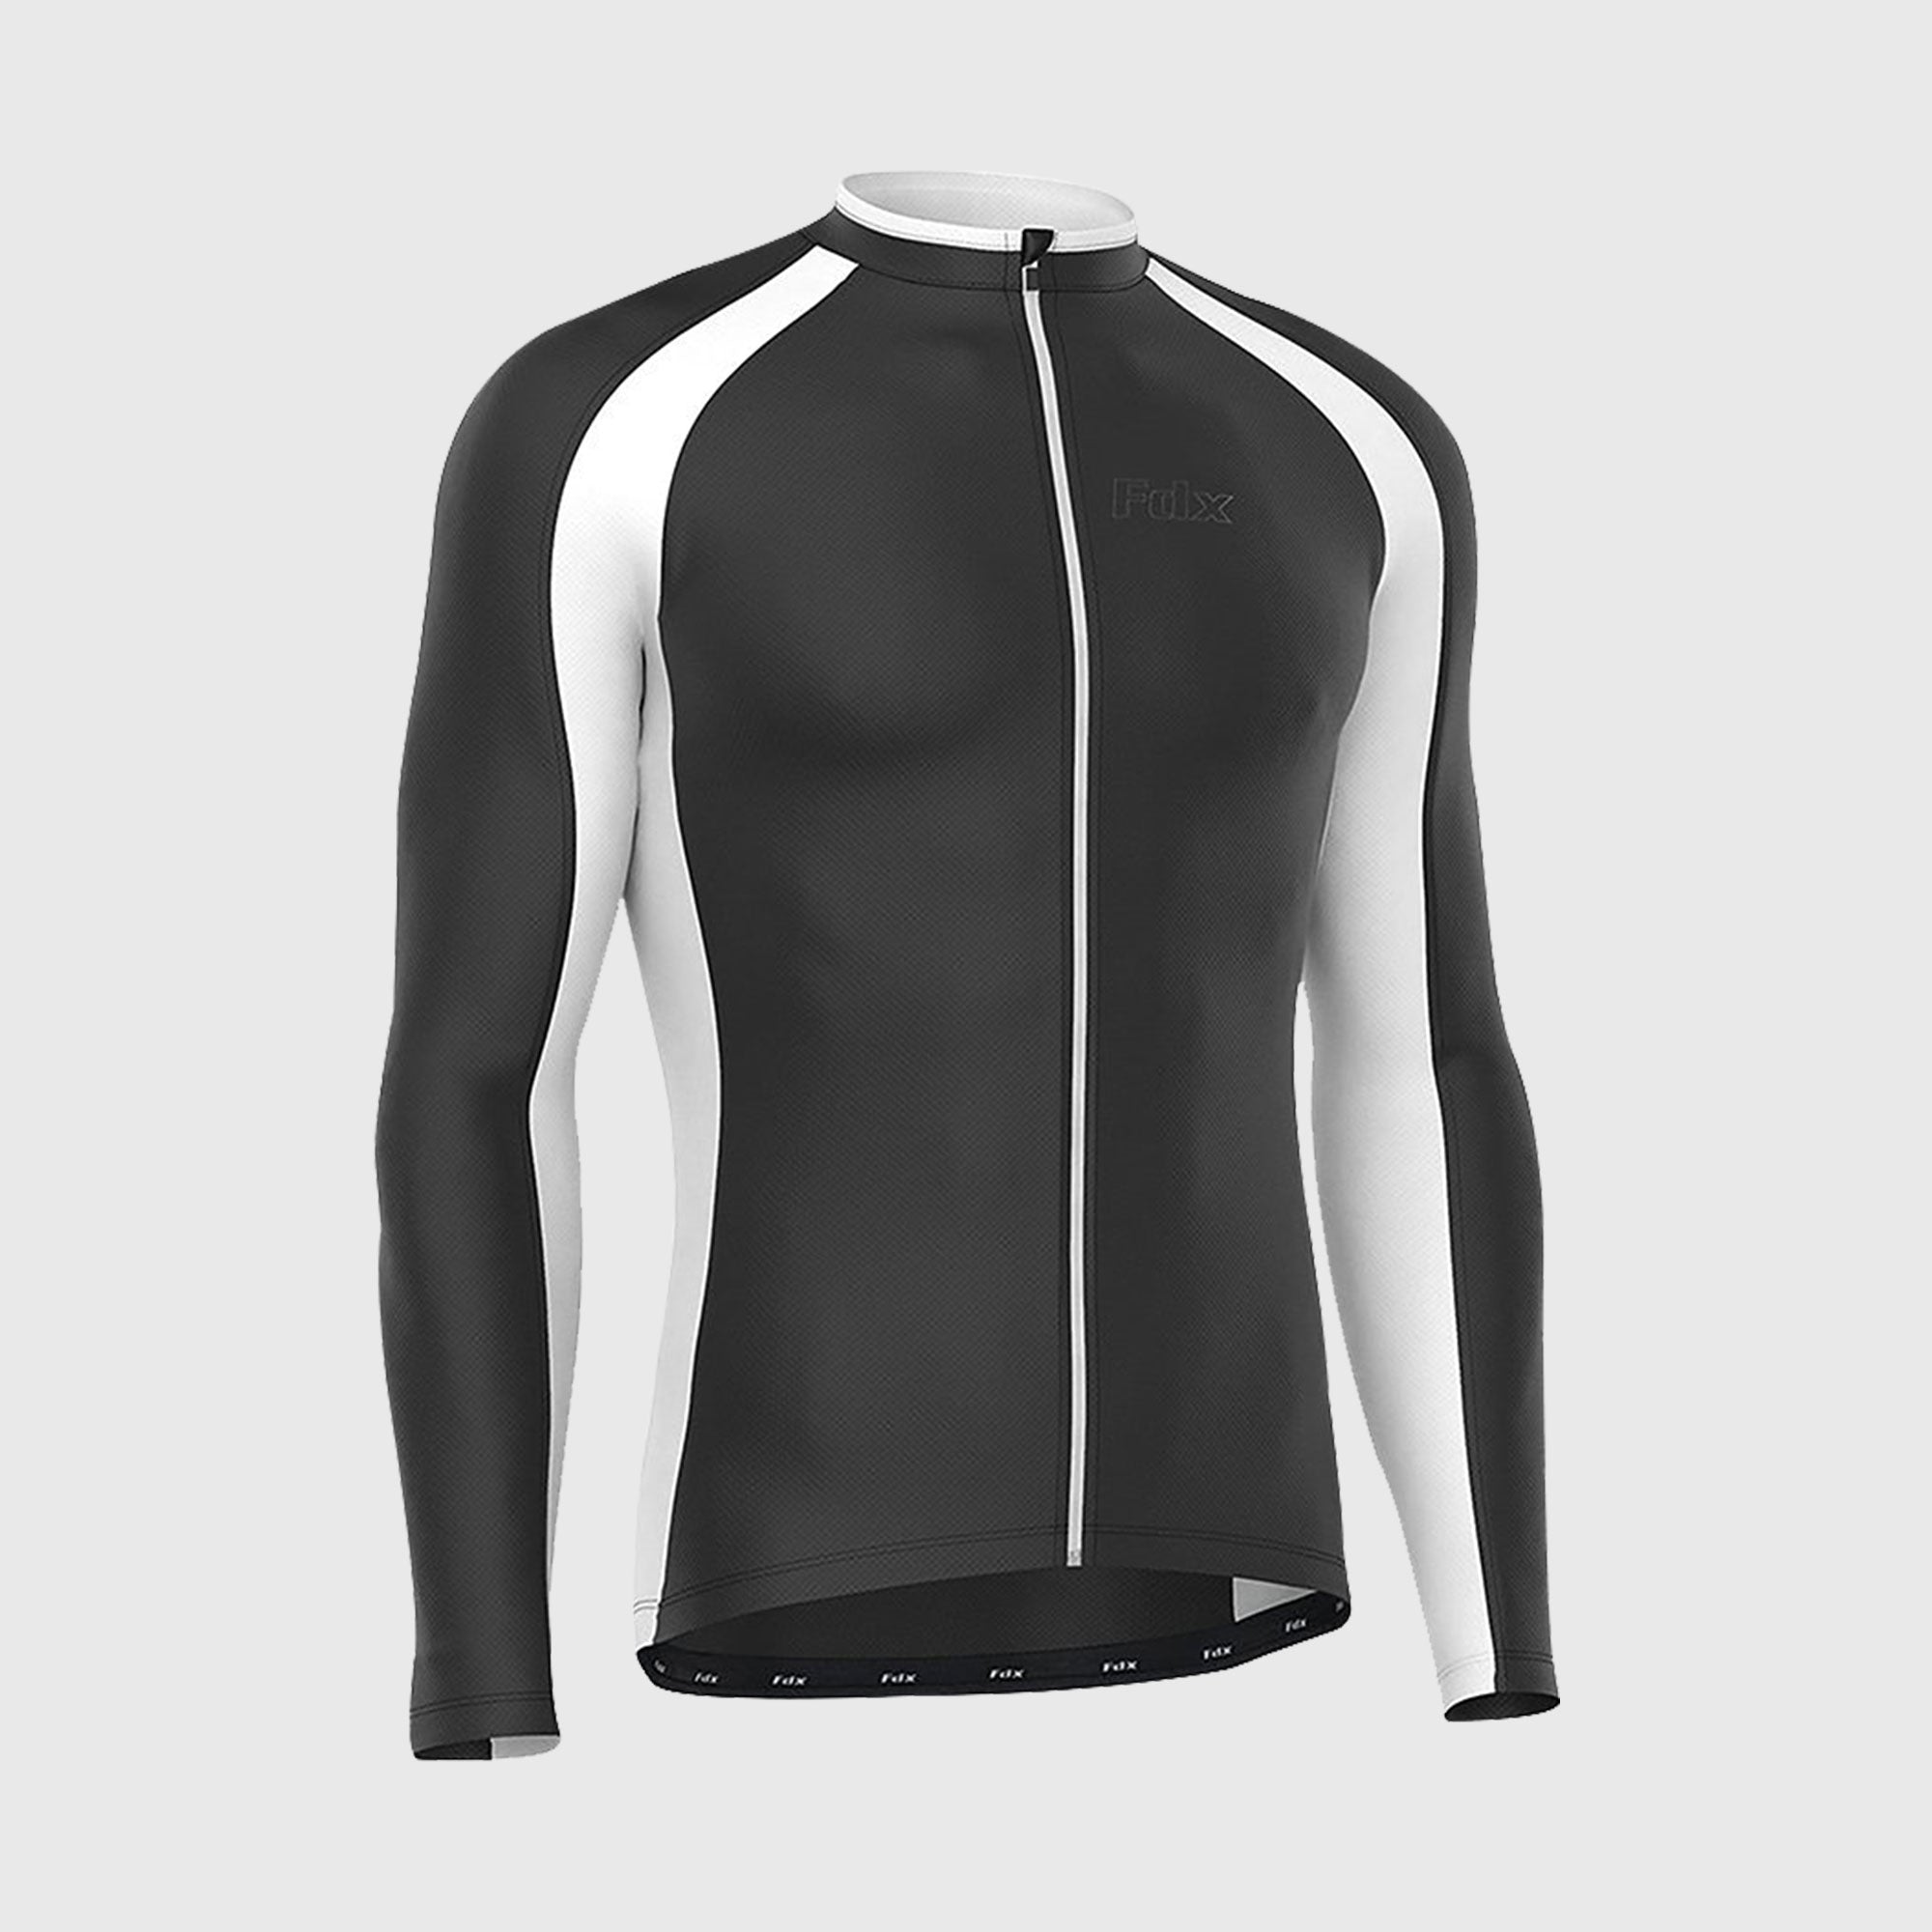 Fdx Black & White best Men's Long Sleeve Cycling Jersey for Winter Roubaix Thermal Fleece Road Bike Wear Top Full Zipper, Pockets & Reflective Details - Transition